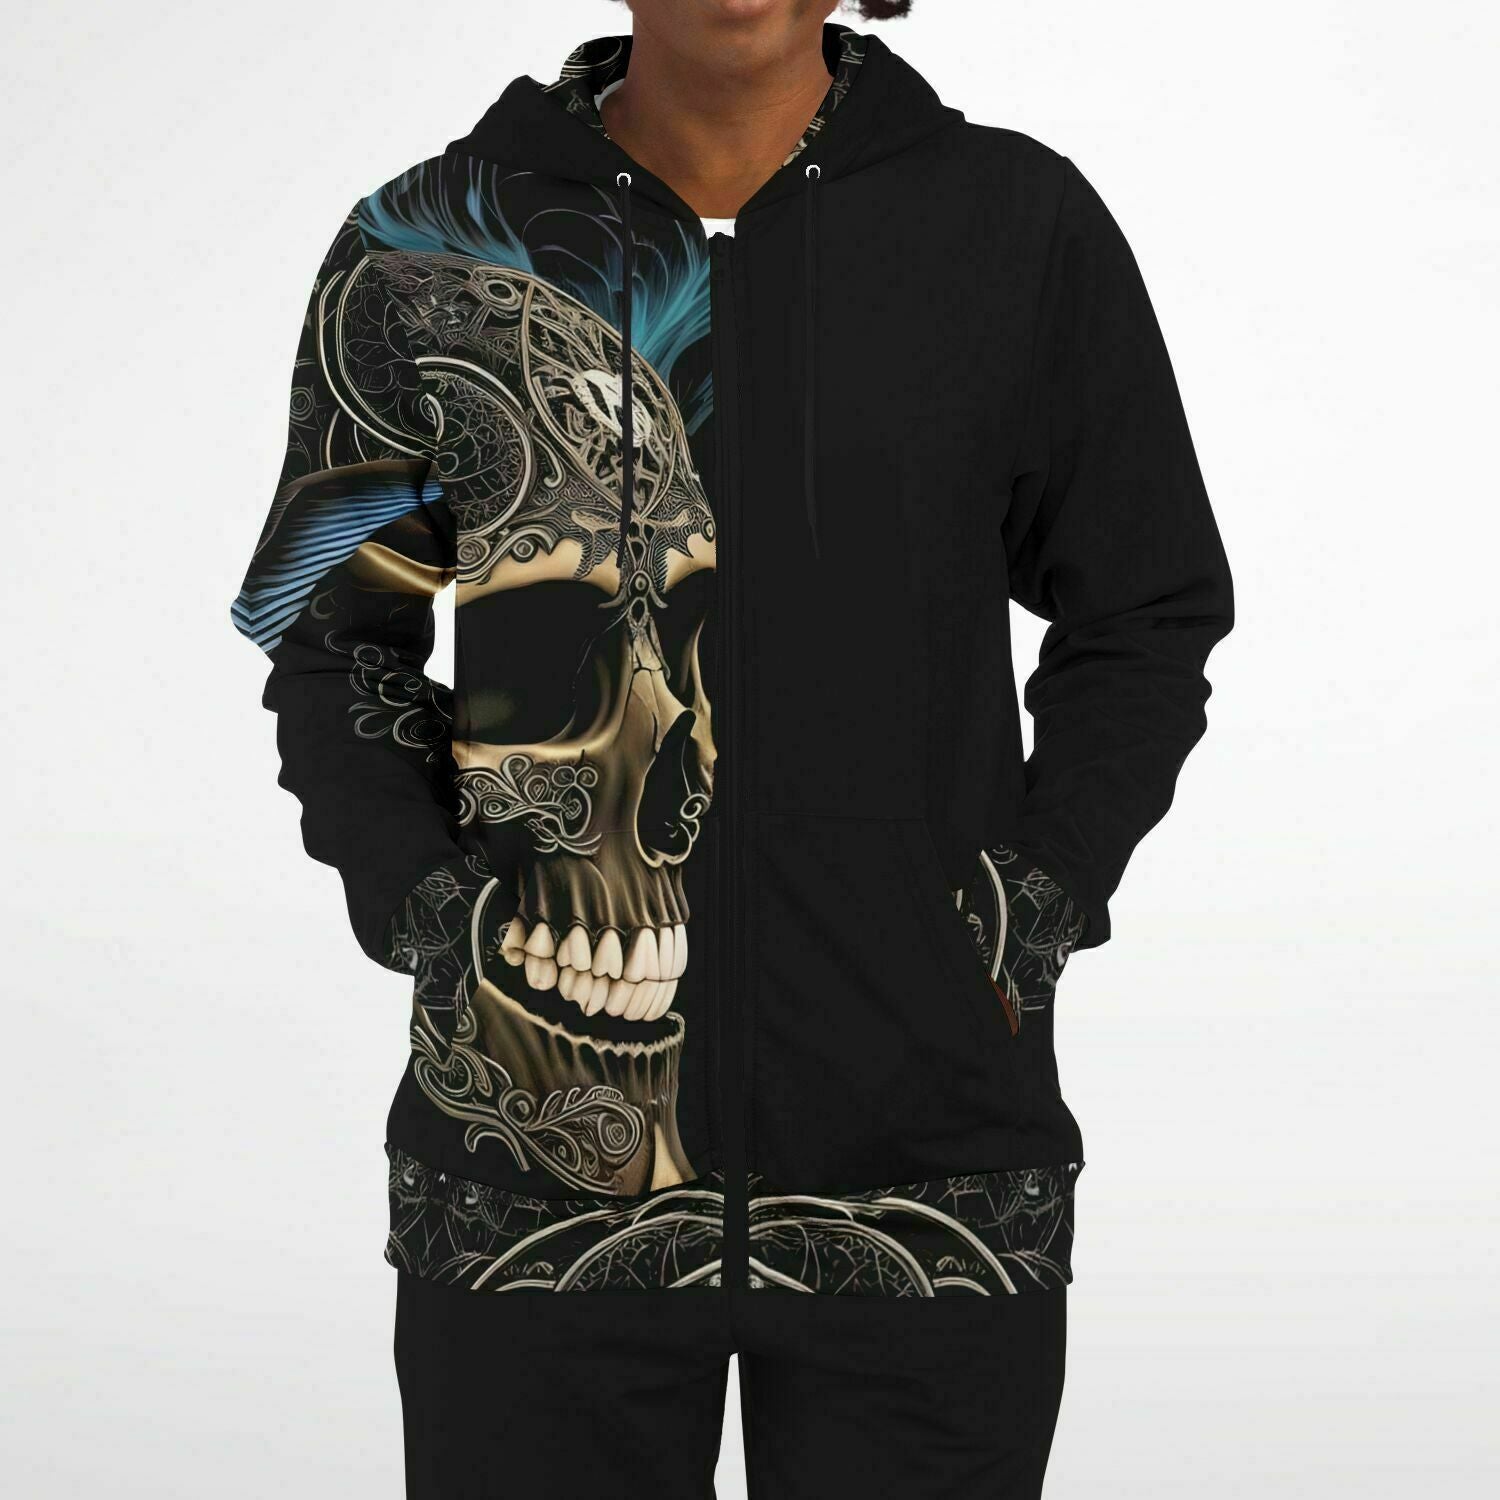 Viking Skull Fashion Zip-Up Hoodie